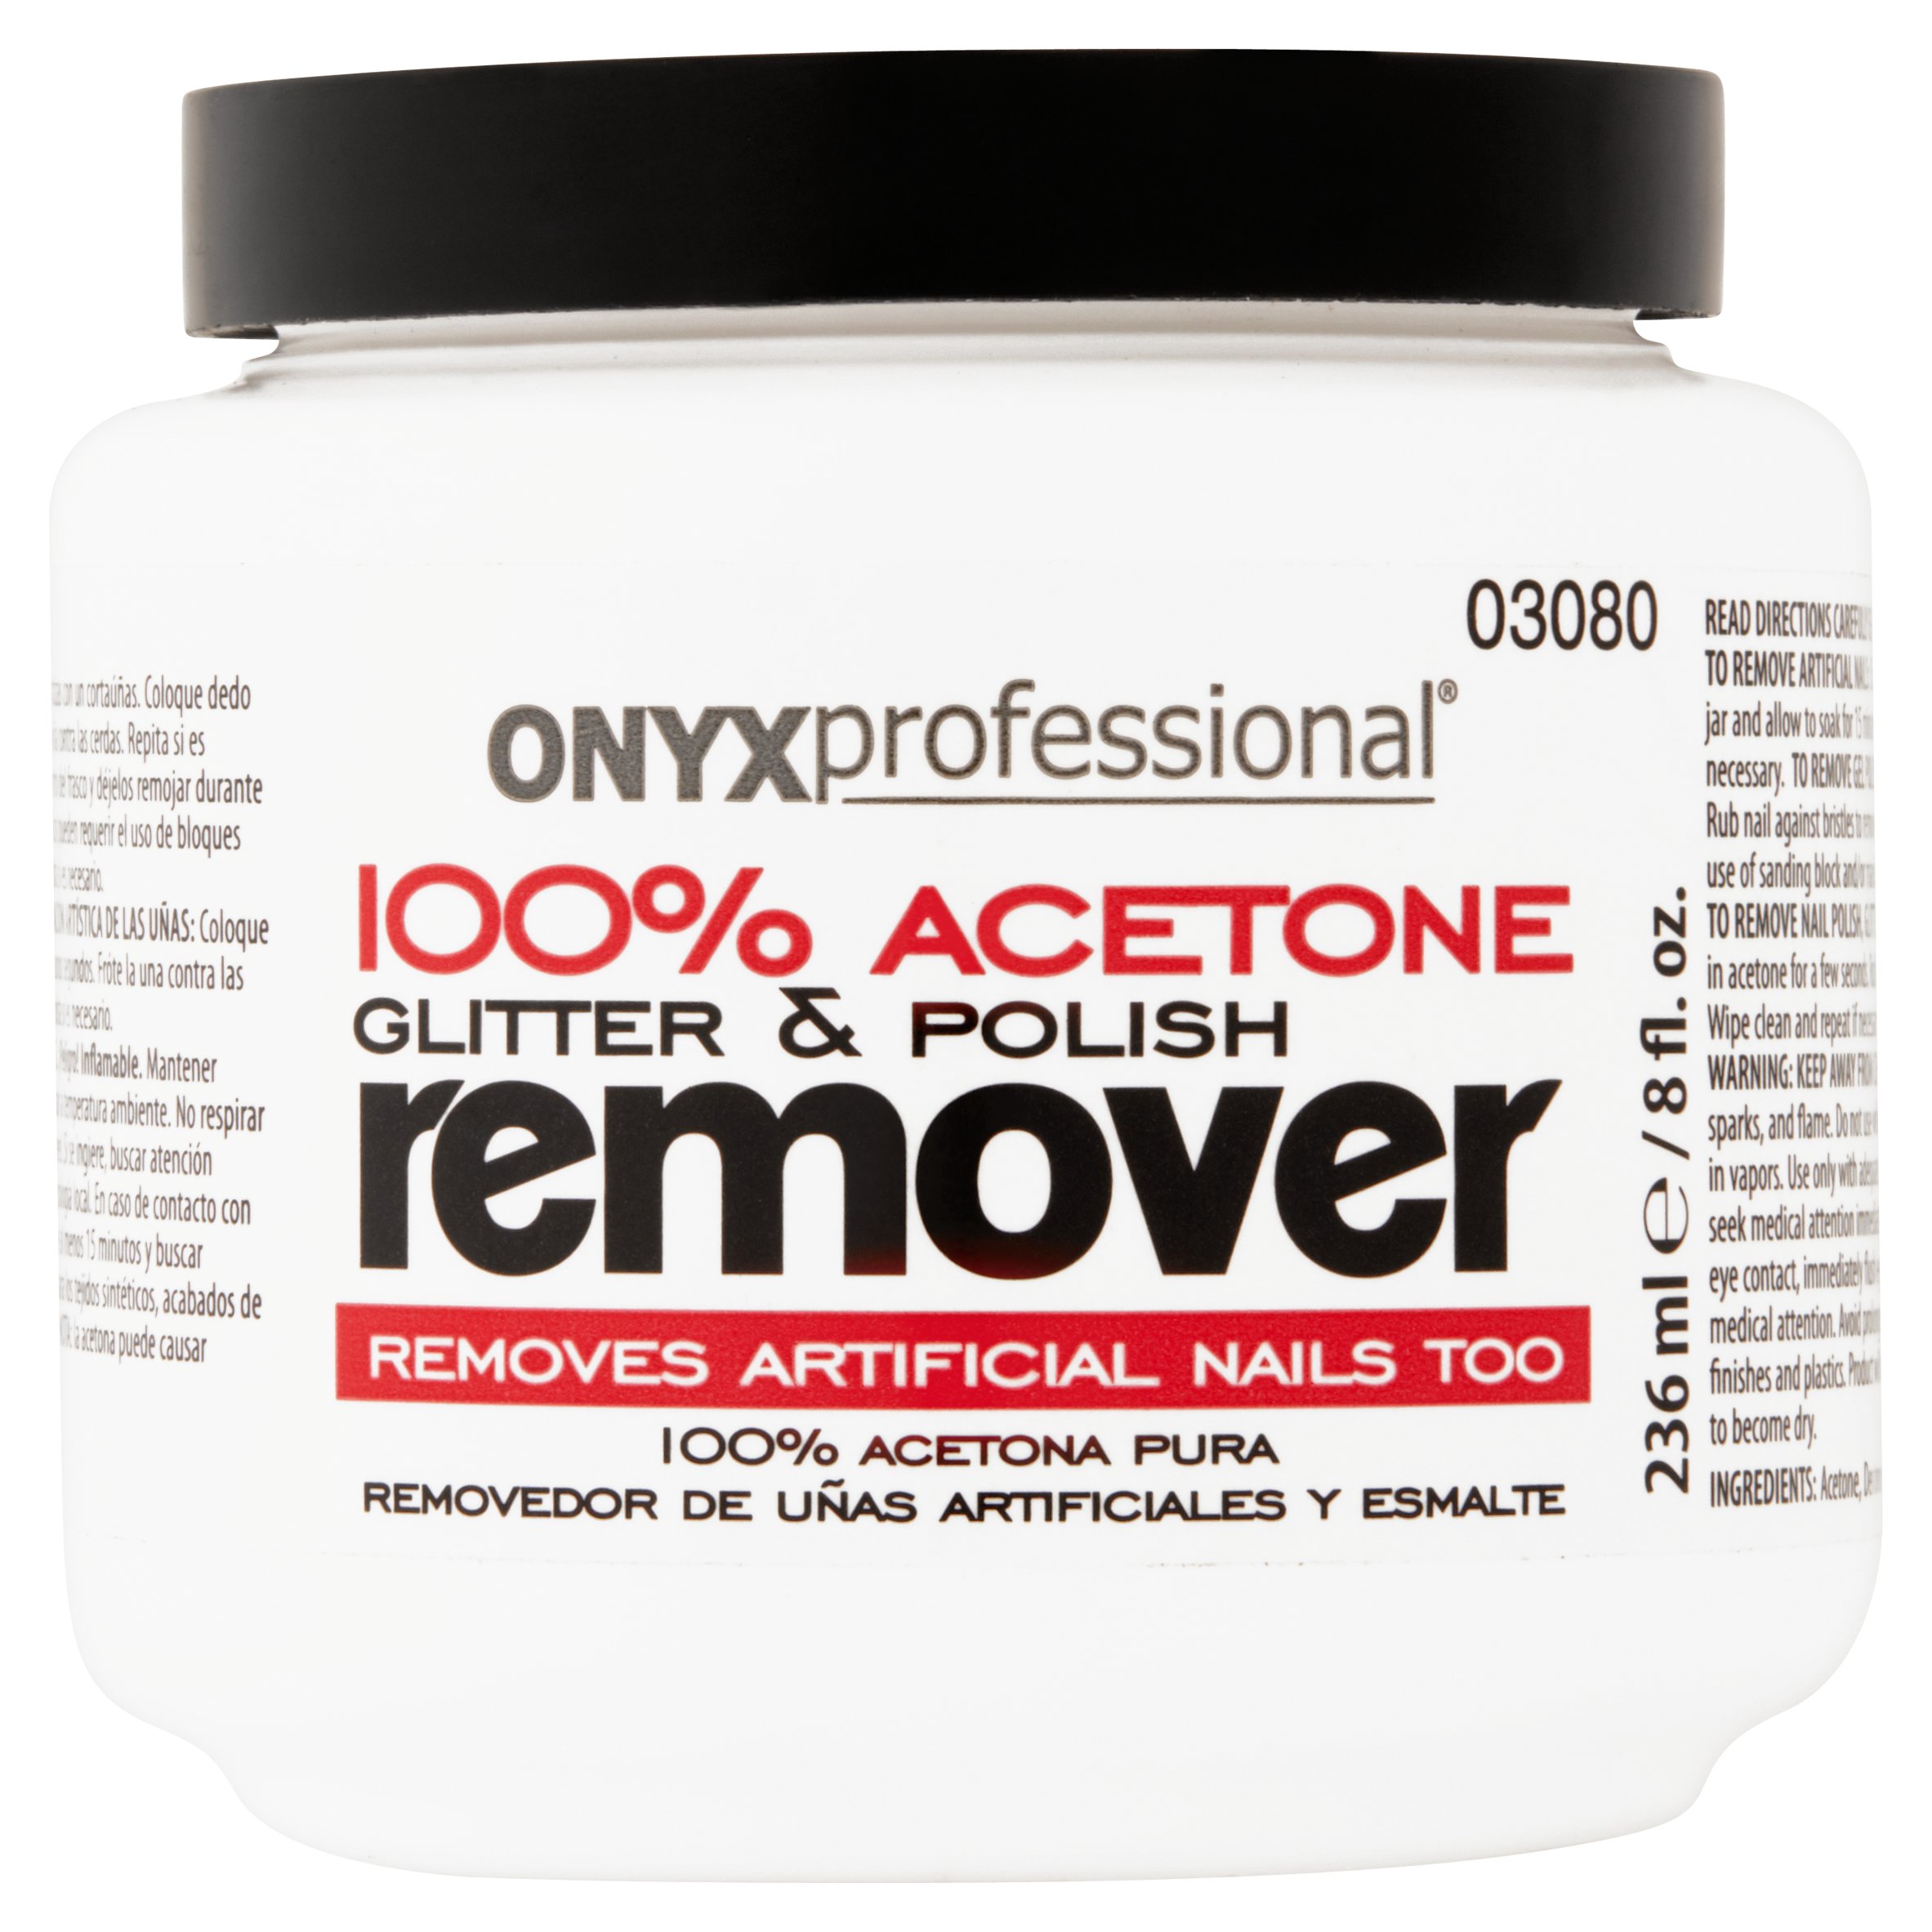 Onyx Professional 100% Acetone Glitter & Polish Remover, 8 fl oz - image 1 of 5